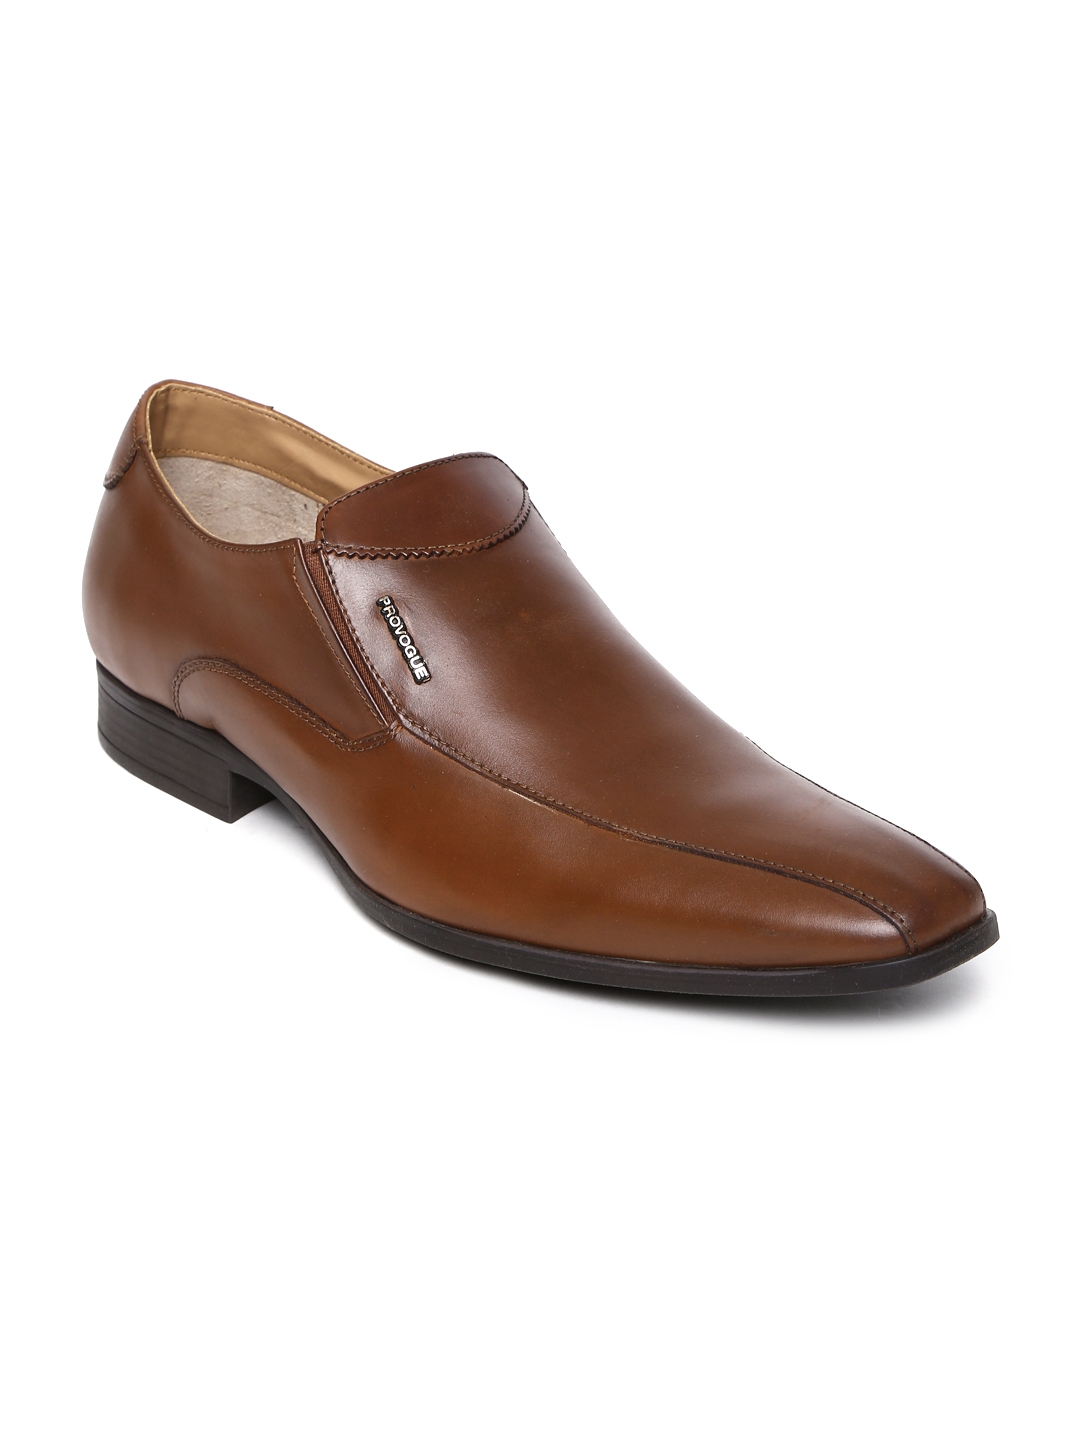 Buy Provogue Men Brown Leather Formal 